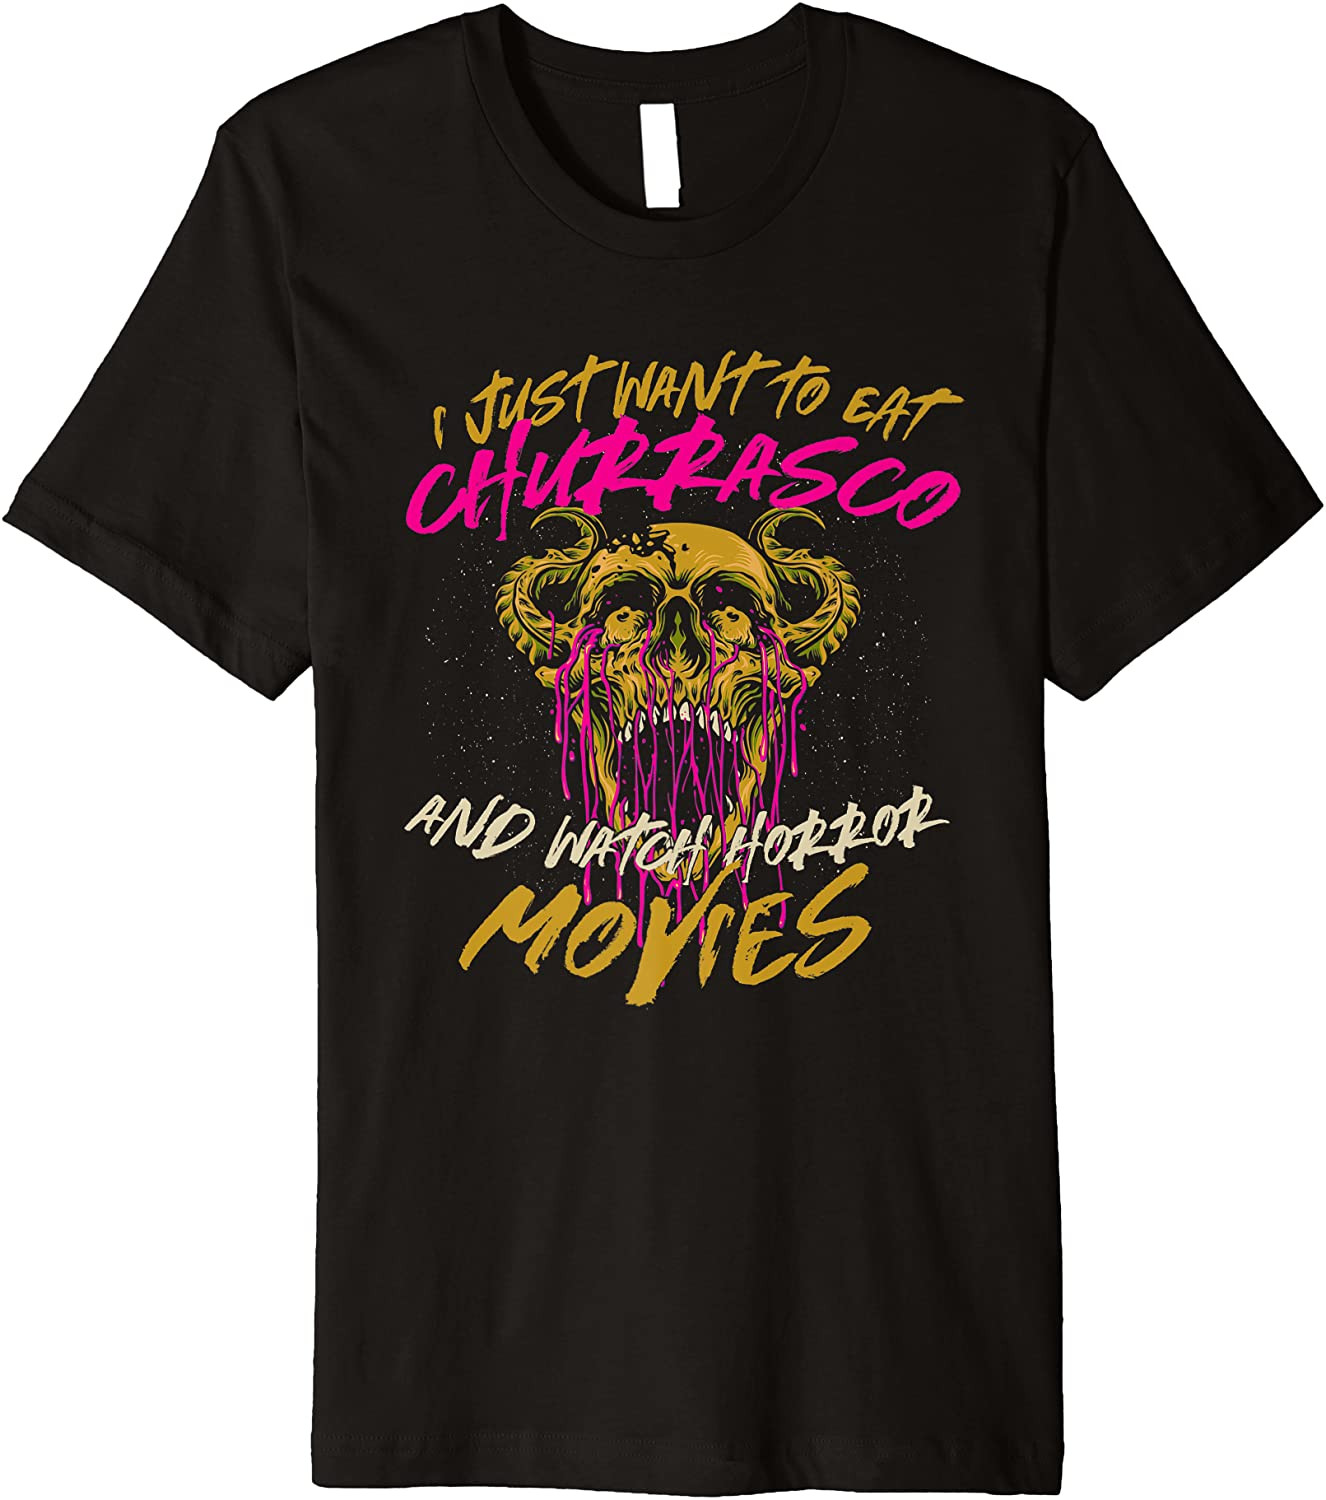 Eat Churrasco And Watch Horror Movies Comfort Food Steak T-Shirt